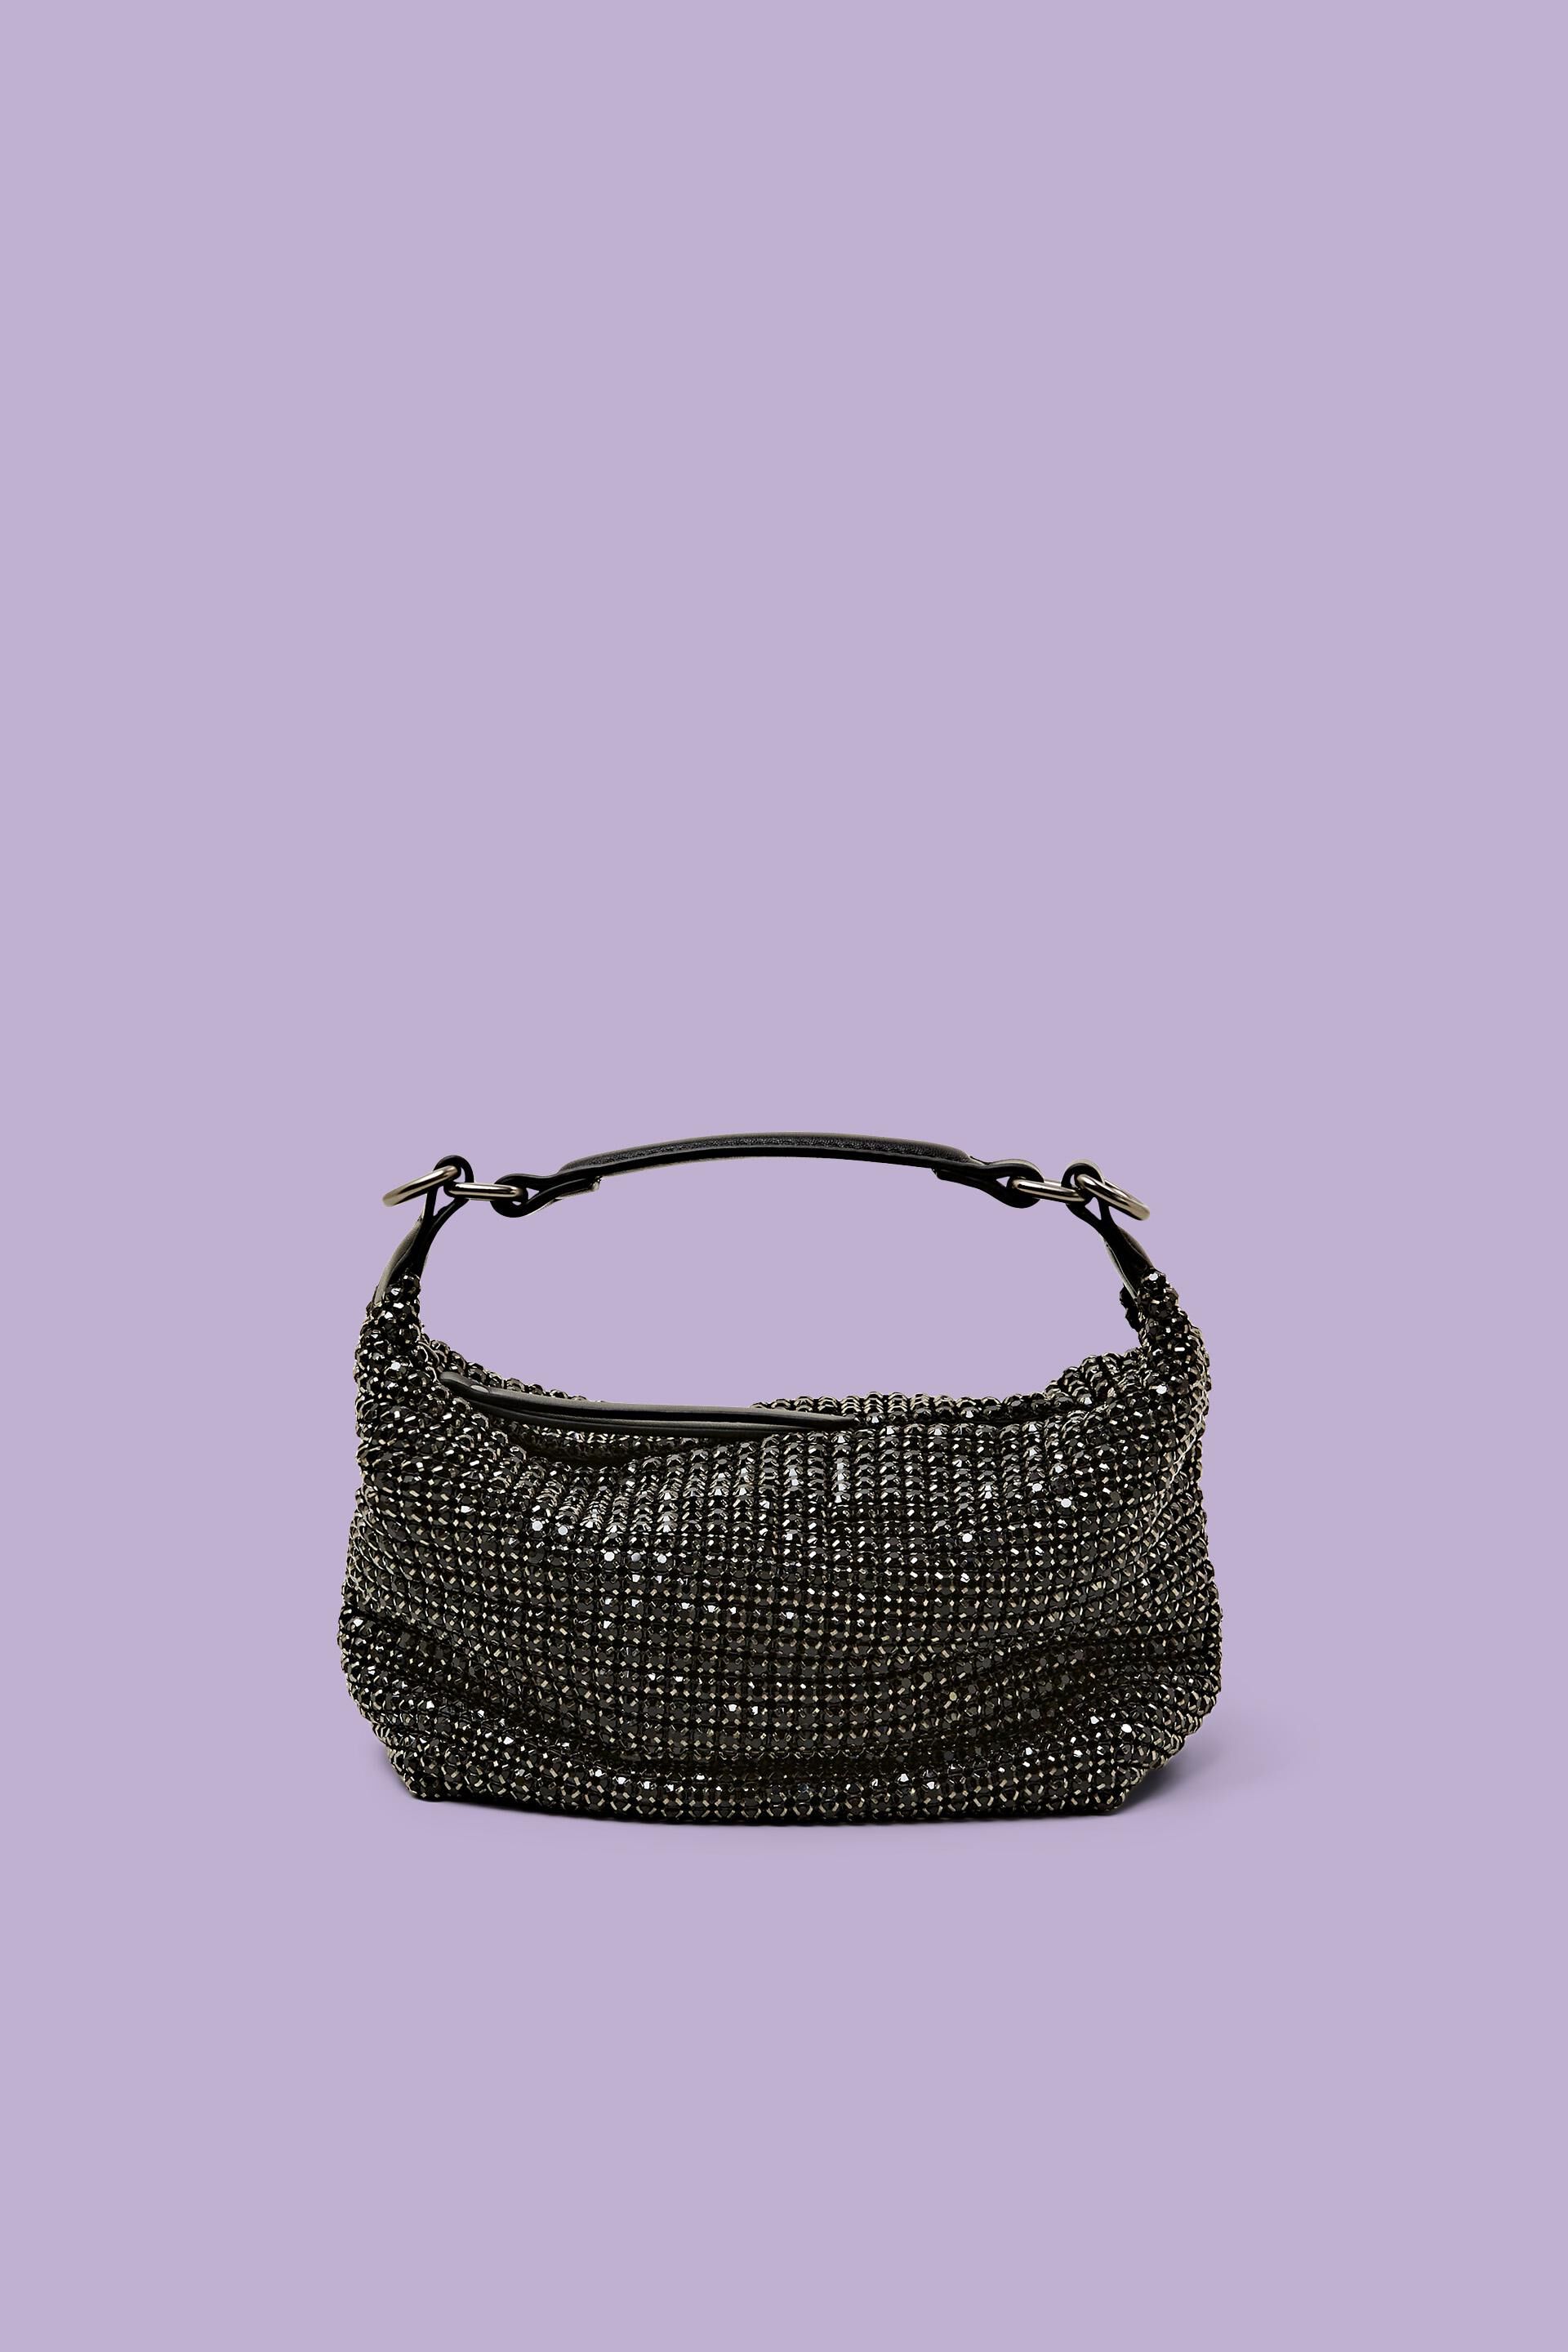 Women's Evening Bag, Rhinestone Clutch Purse for  Formal/Wedding/Cocktail/Prom/Party/Club, Sparkly Shiny Silver Handbag Bag  Diamond Hobo Bags (Black): Handbags: Amazon.com